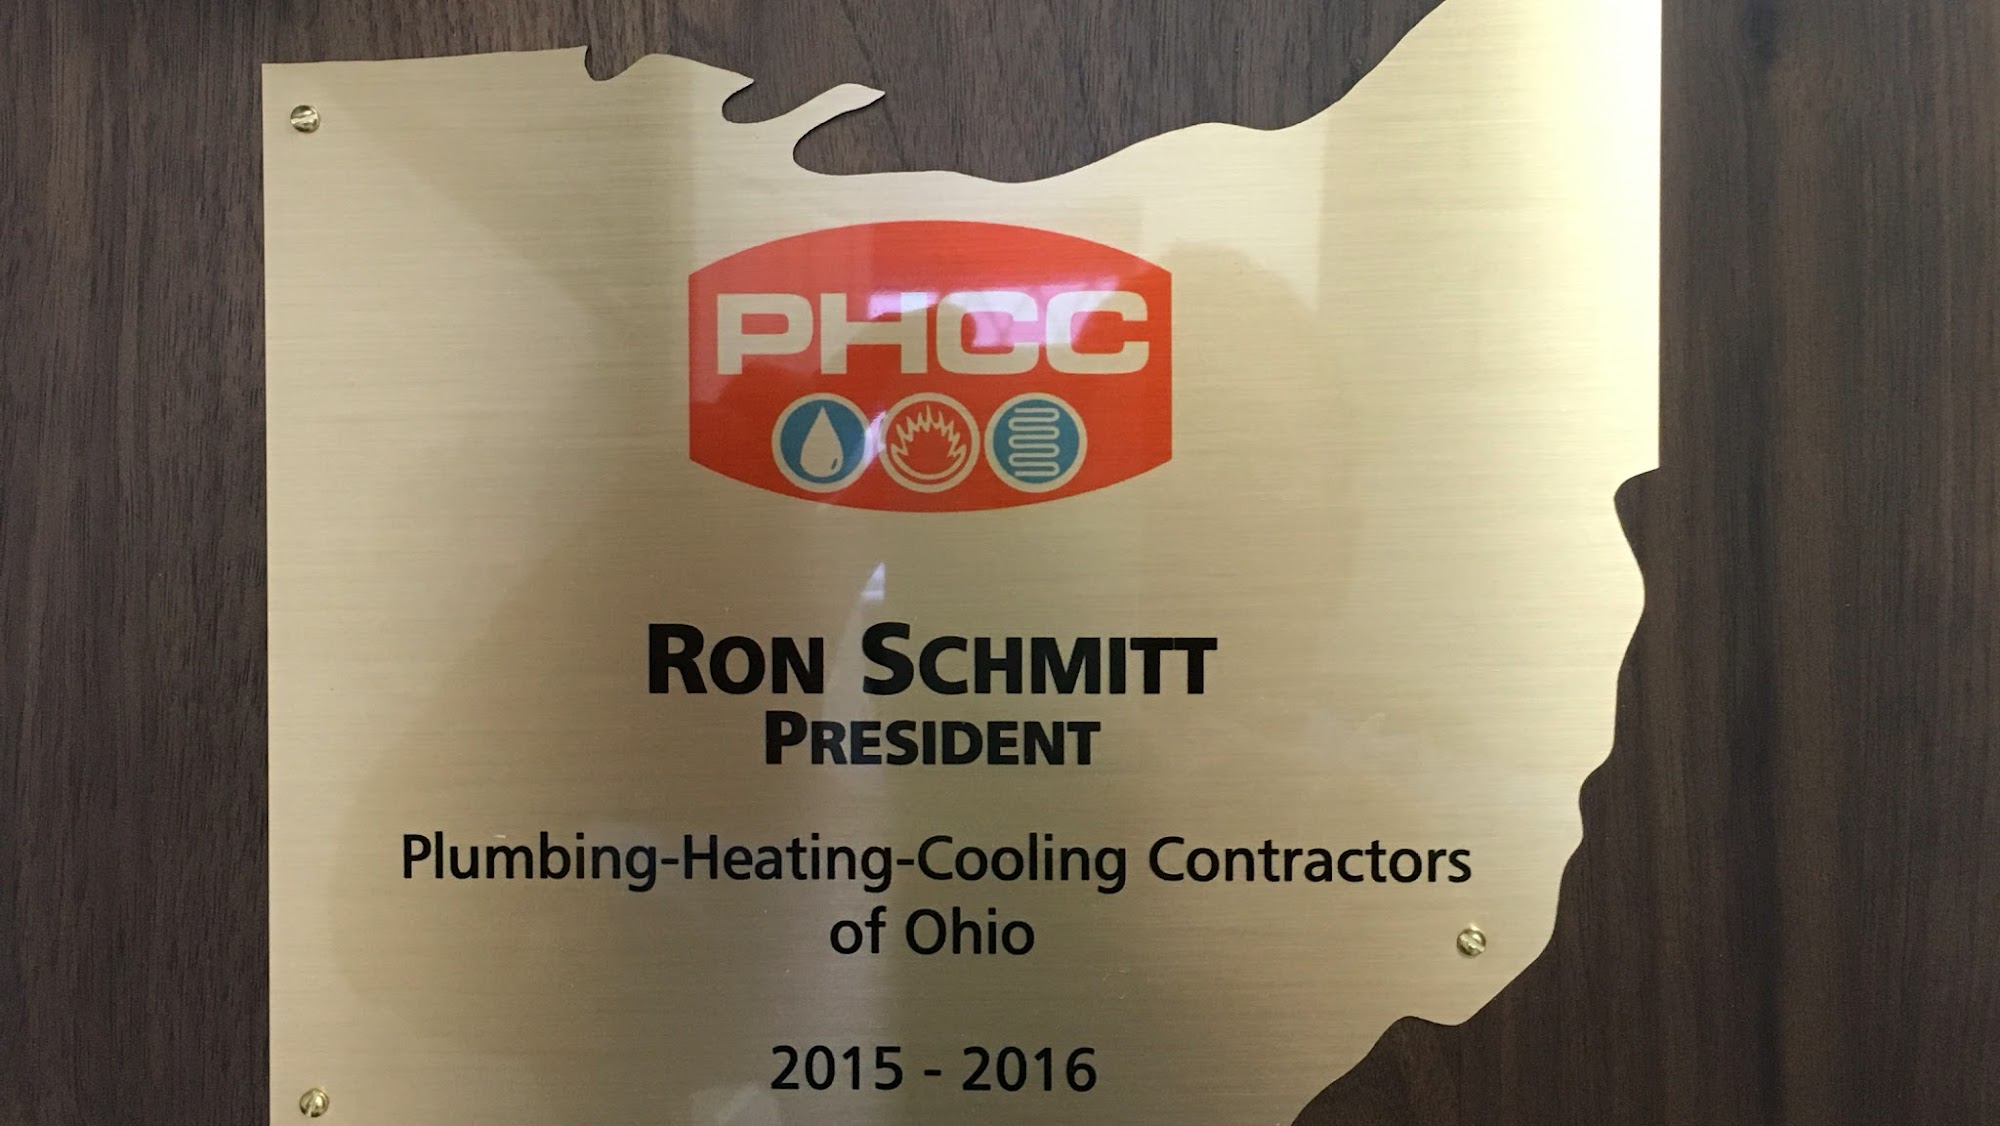 Joe Schmitt & Sons Plumbing and heating llc 500 Alta Ave, Englewood Ohio 45322